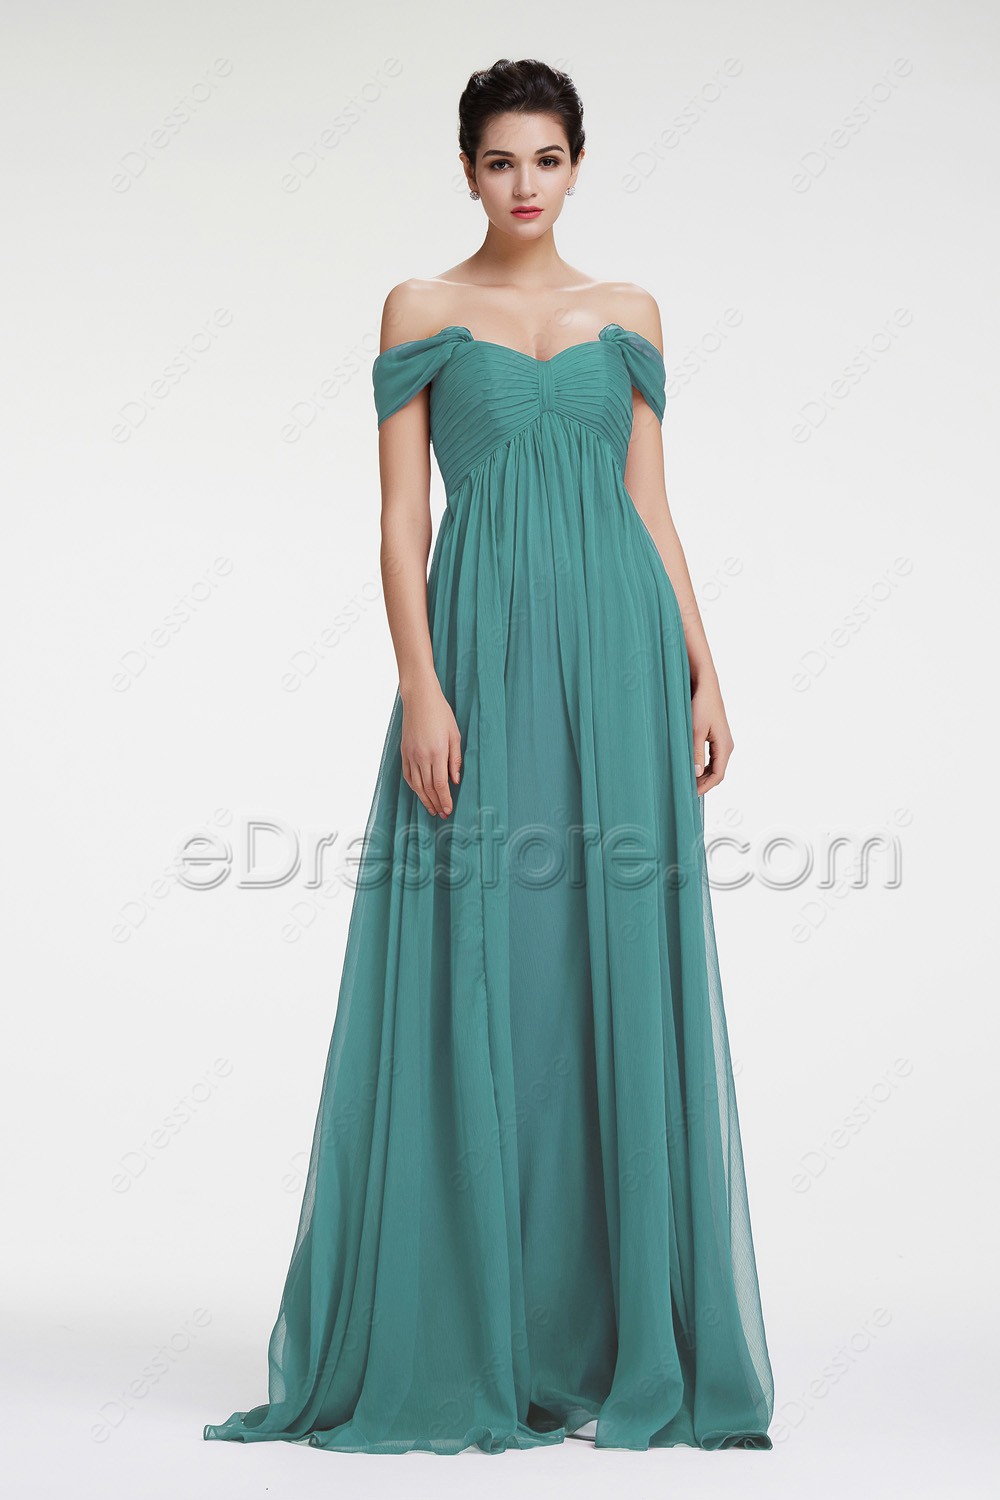 Dillards Store Tyrone Mall Size 4x Prom Dress Pastels Colors - Ordaz ...